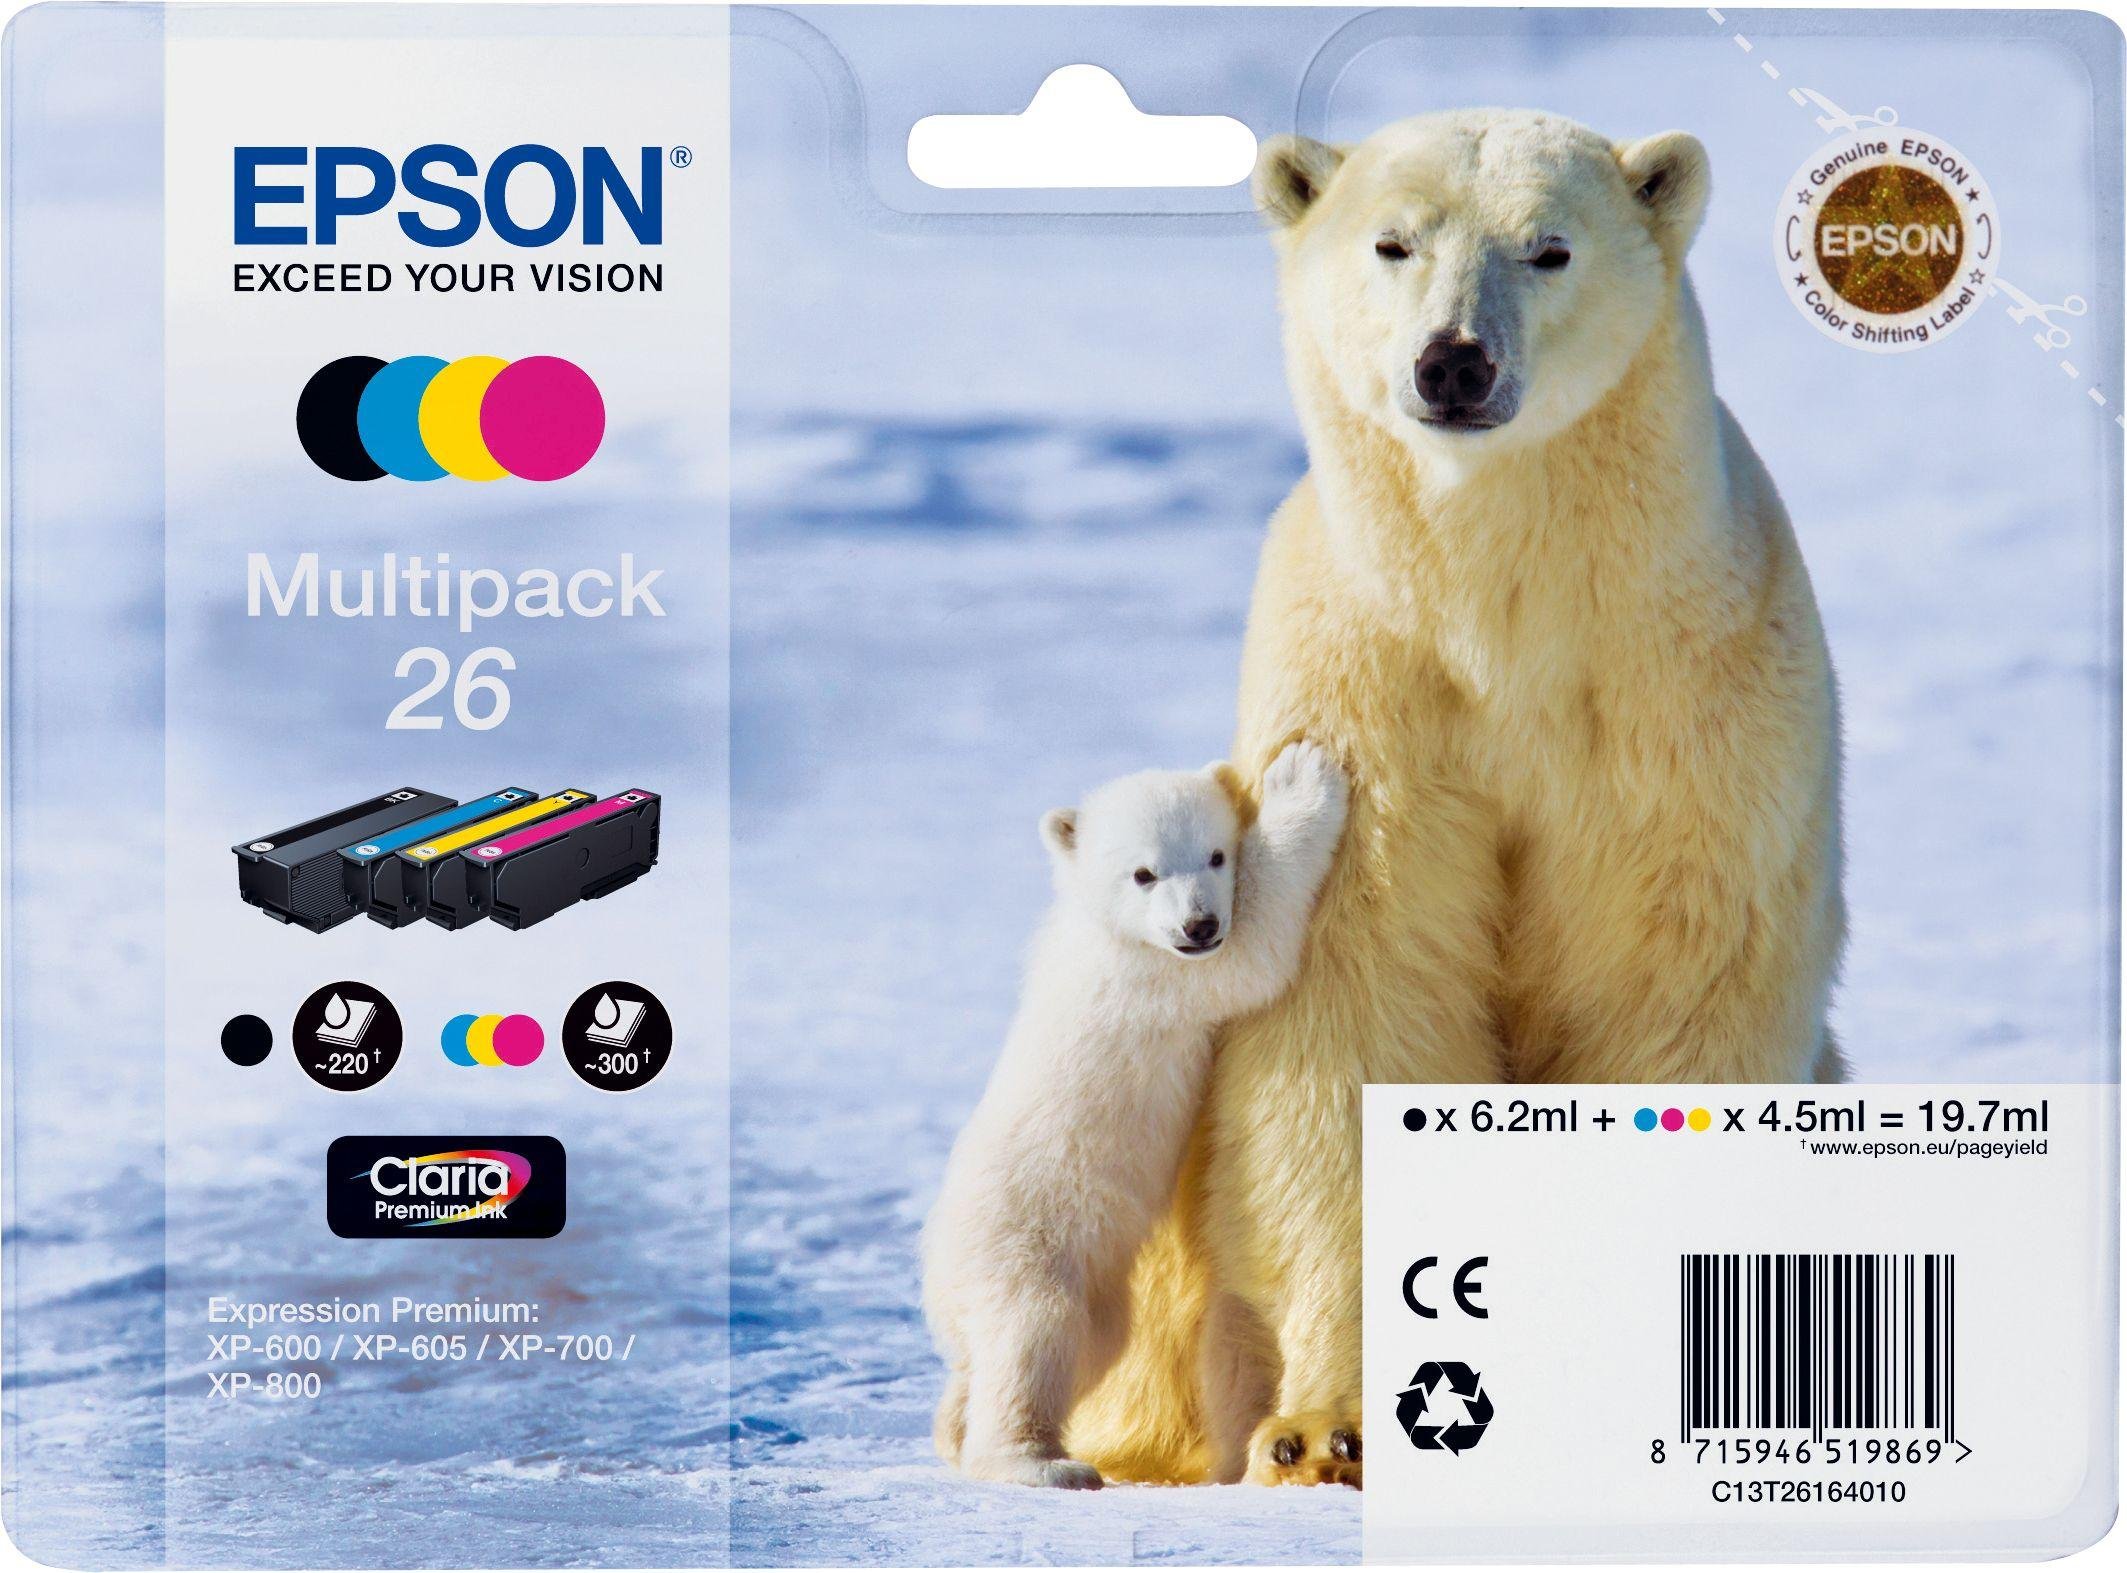 Epson Polar Bear 26 Ink Cartridges Multipack review